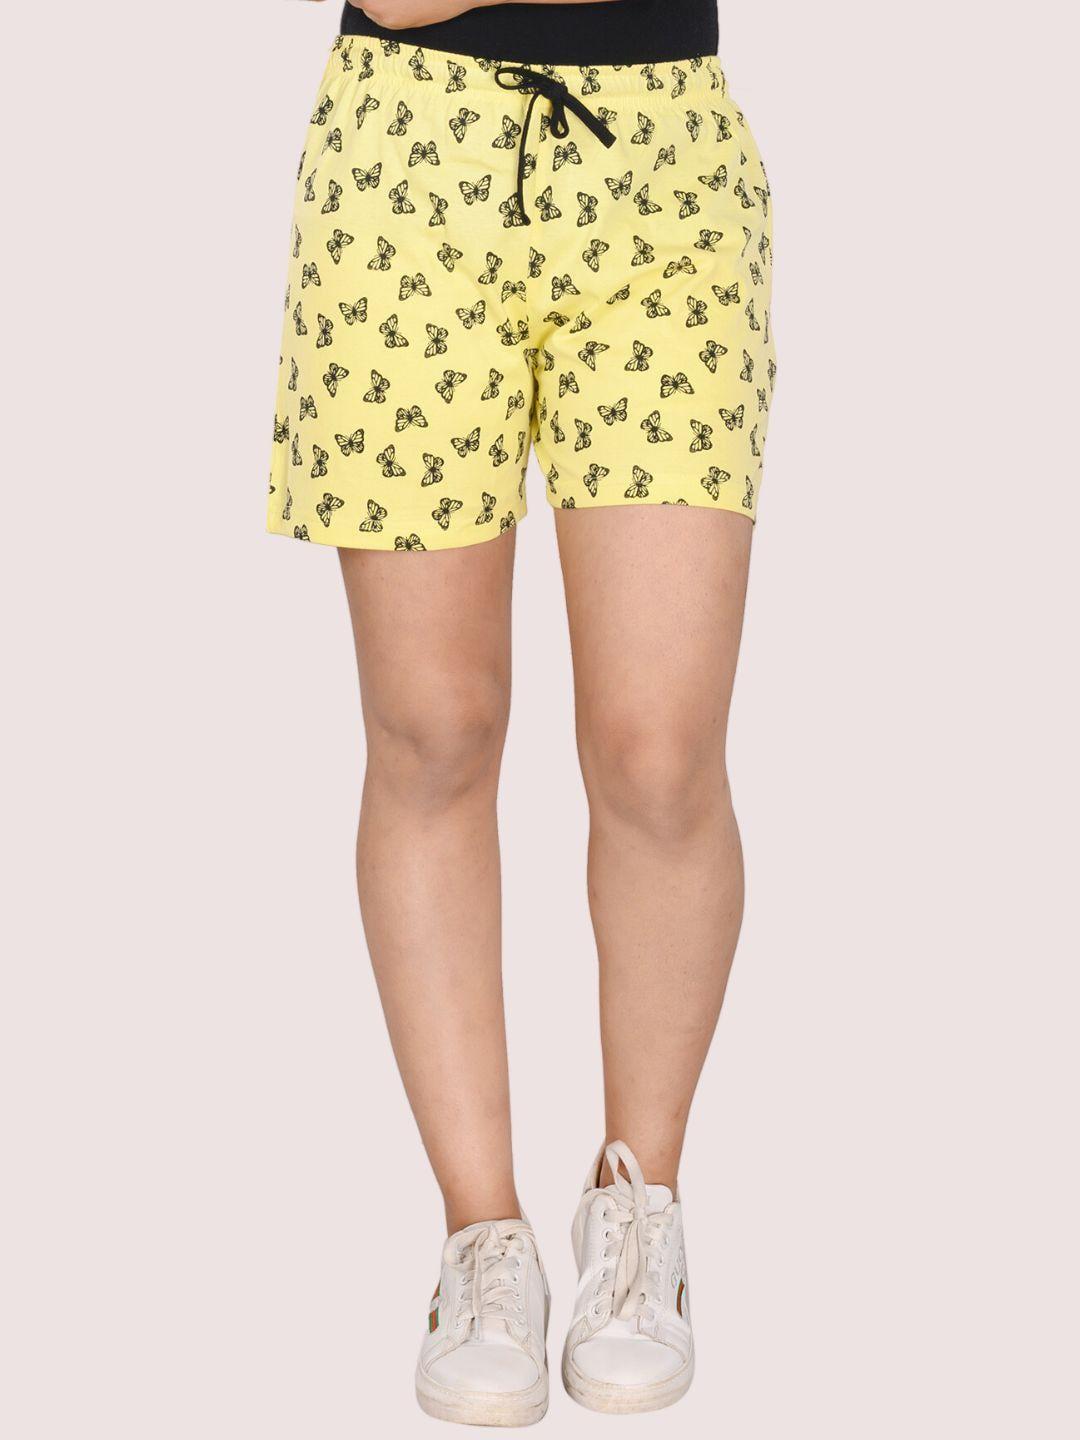 styleaone women yellow printed yoga shorts